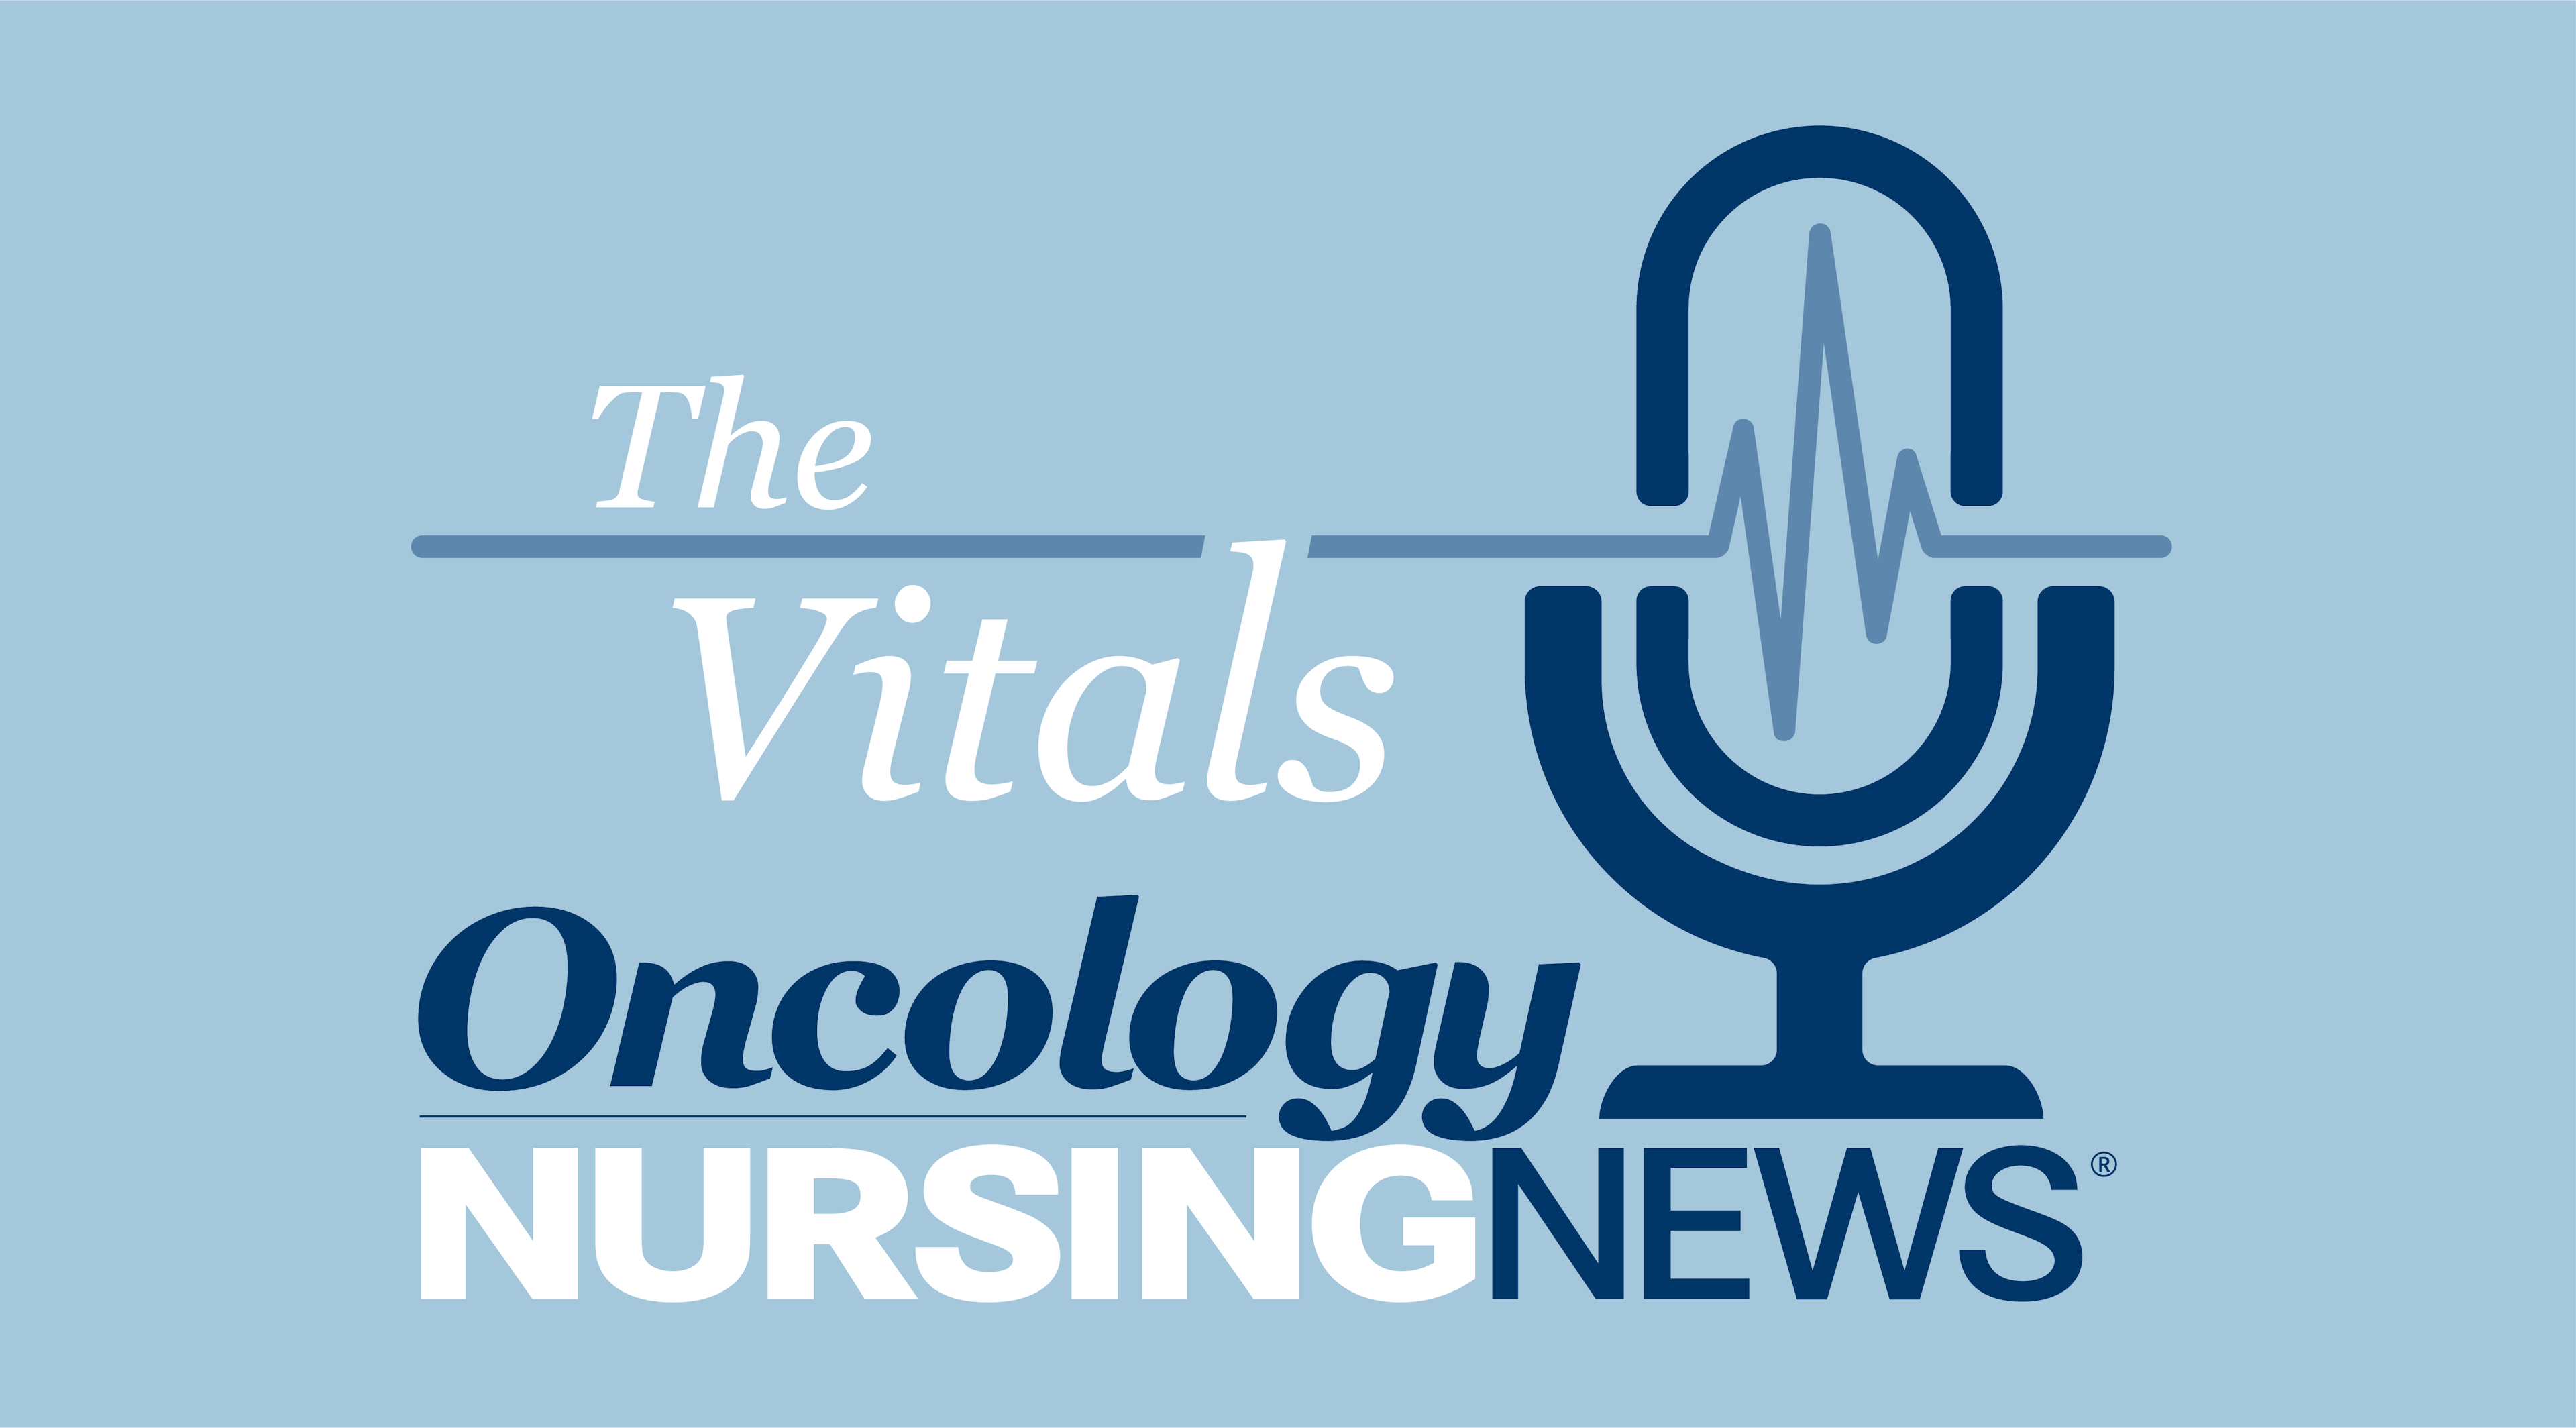 The Vitals - Oncology Nursing News